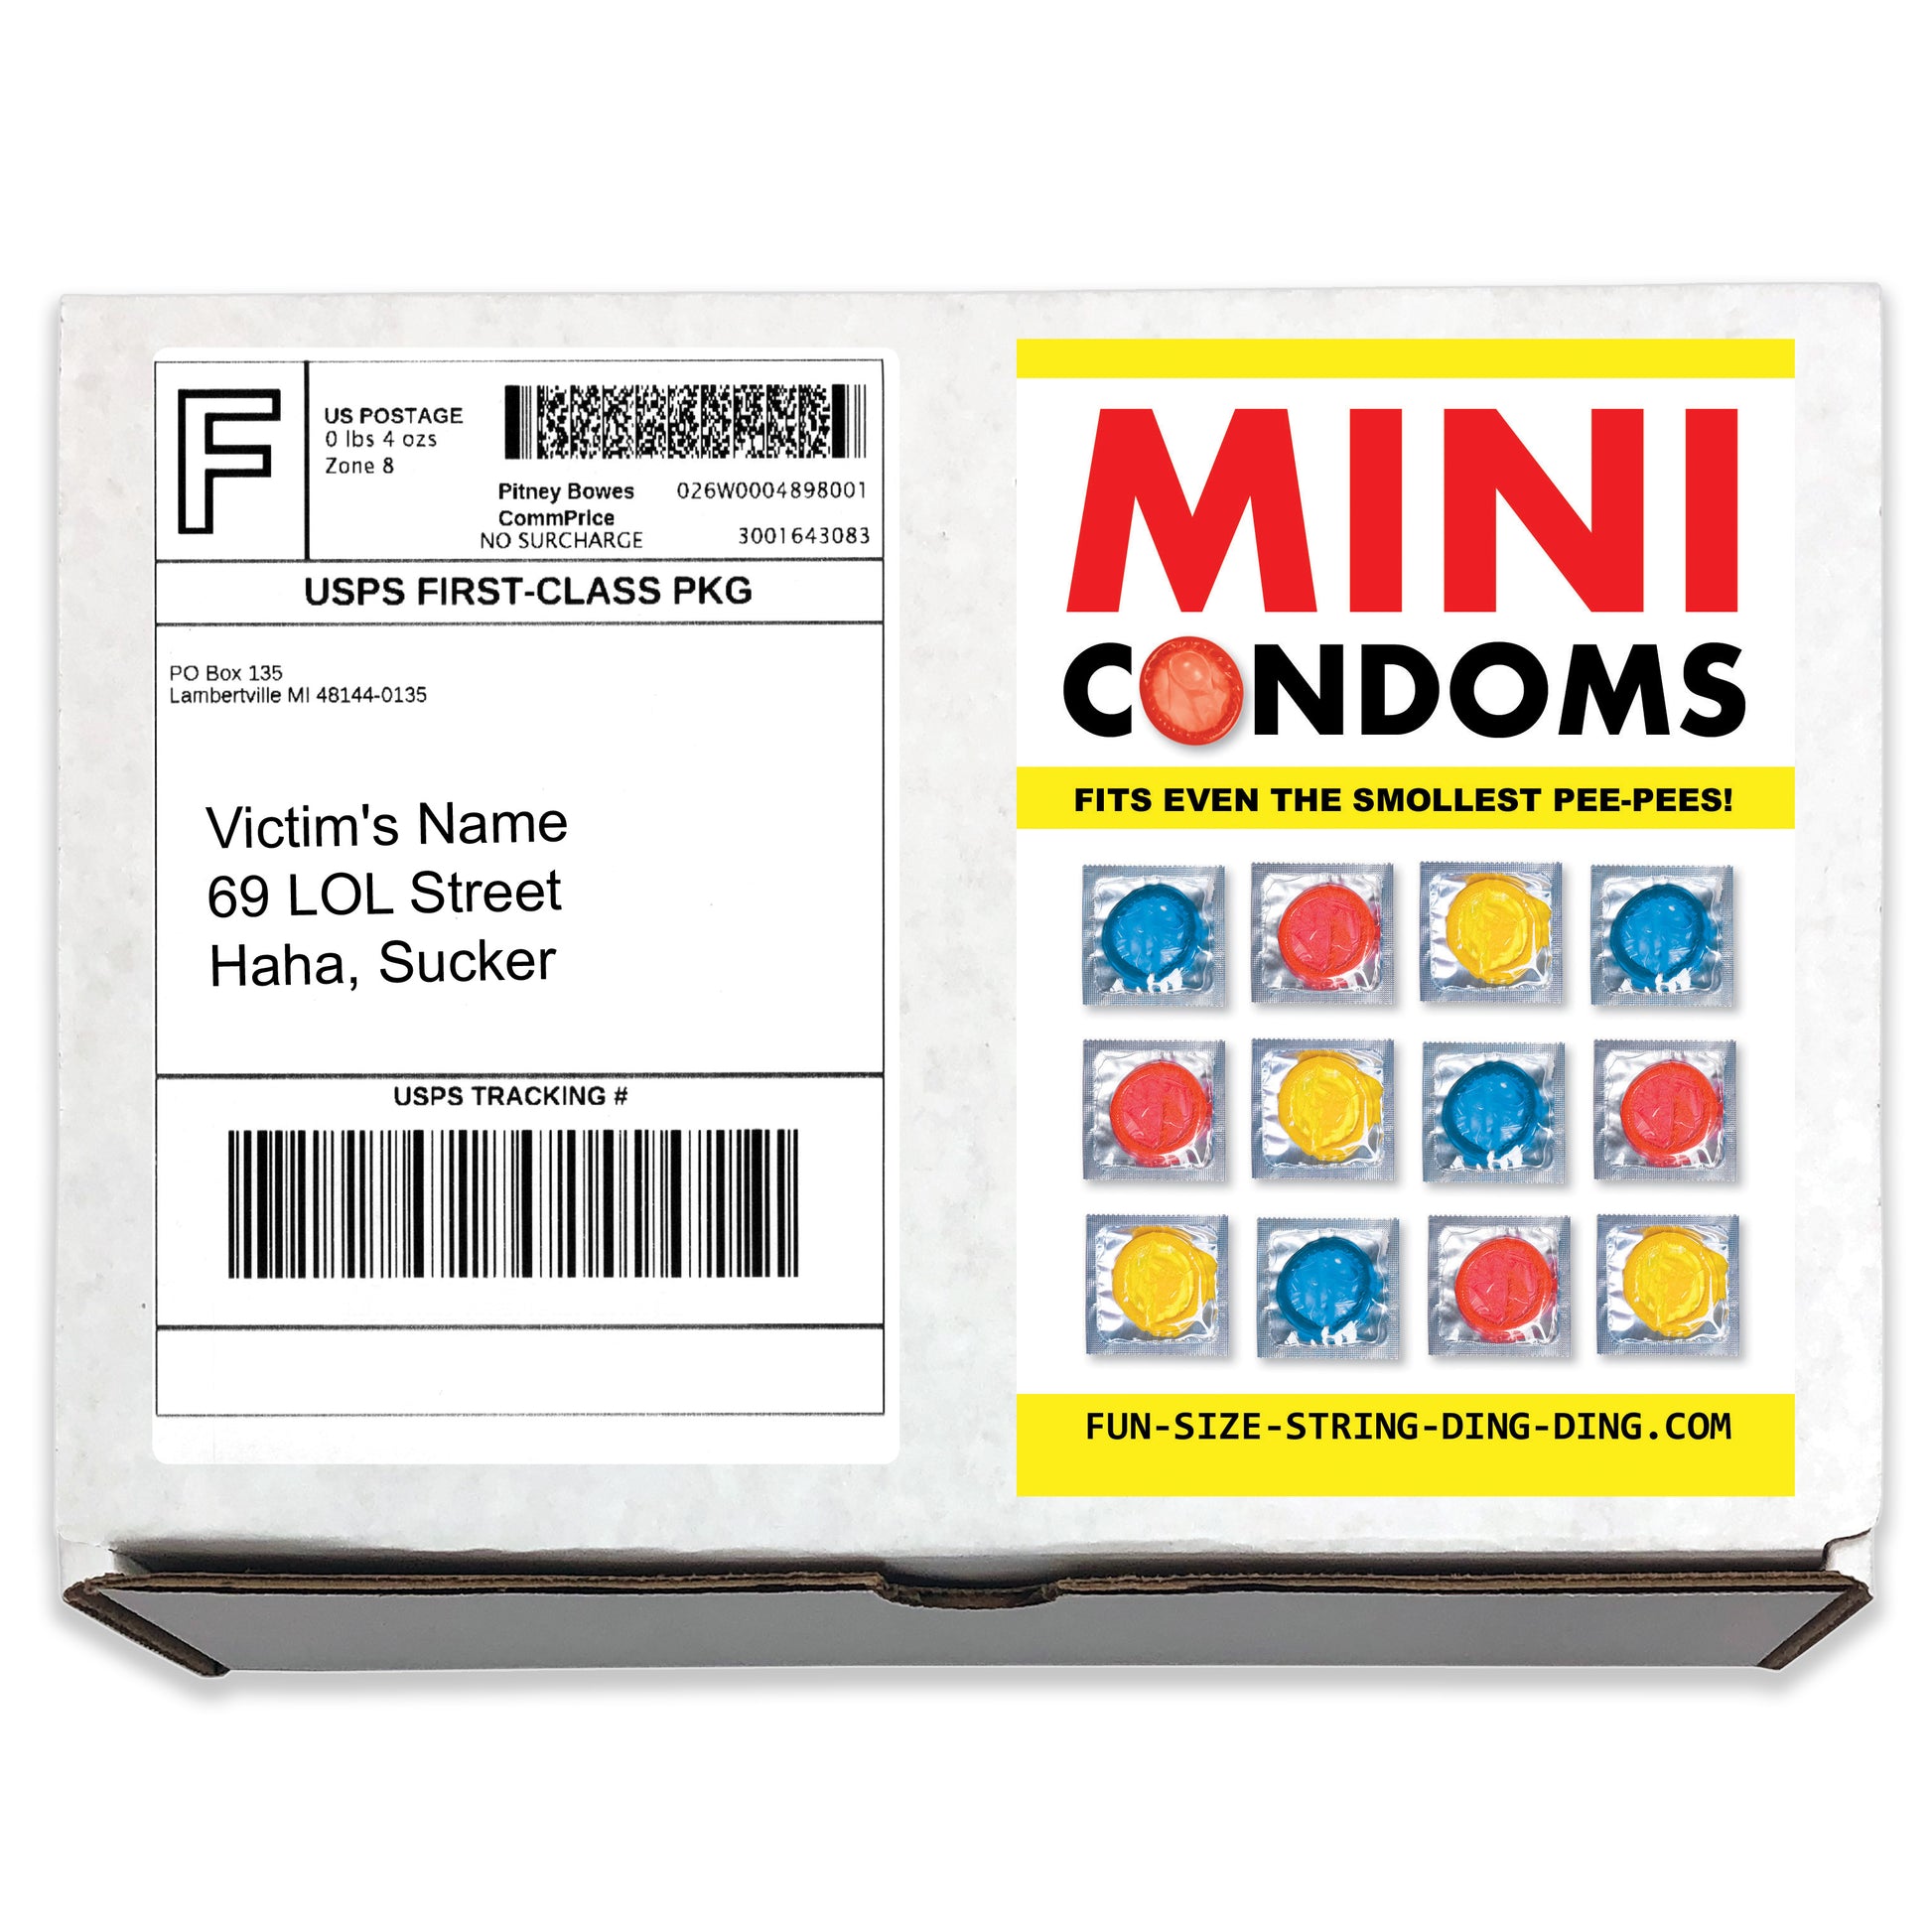 Mini Condoms Prank Mail Gag Gift Box